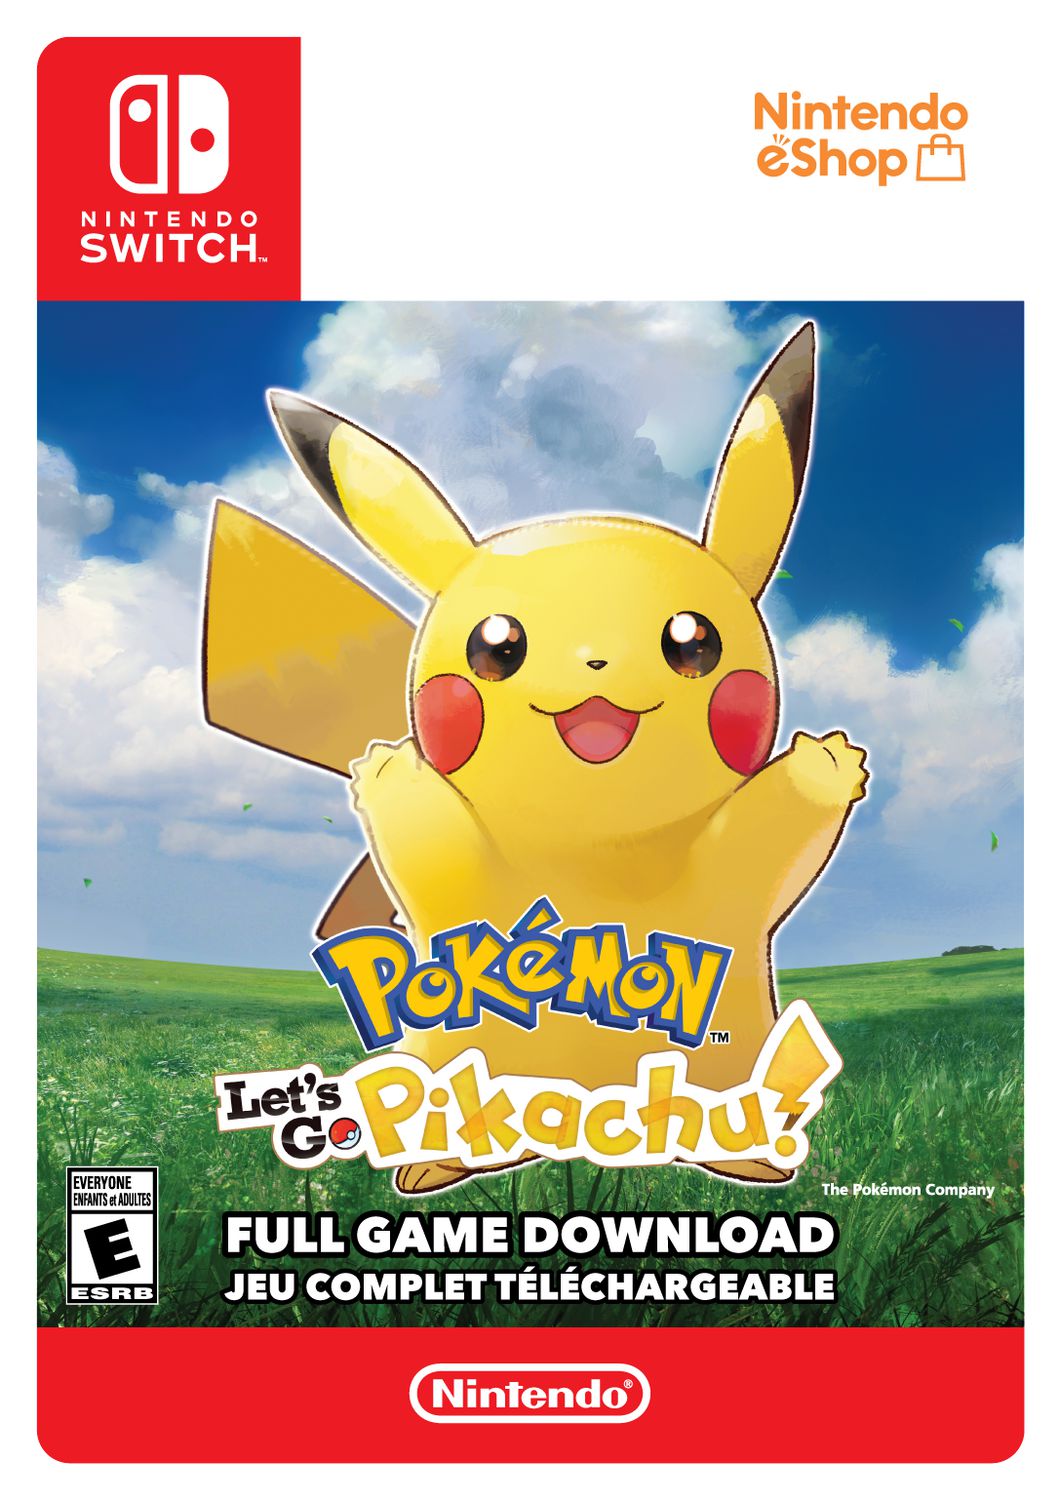 nintendo pokemon let's go pikachu switch